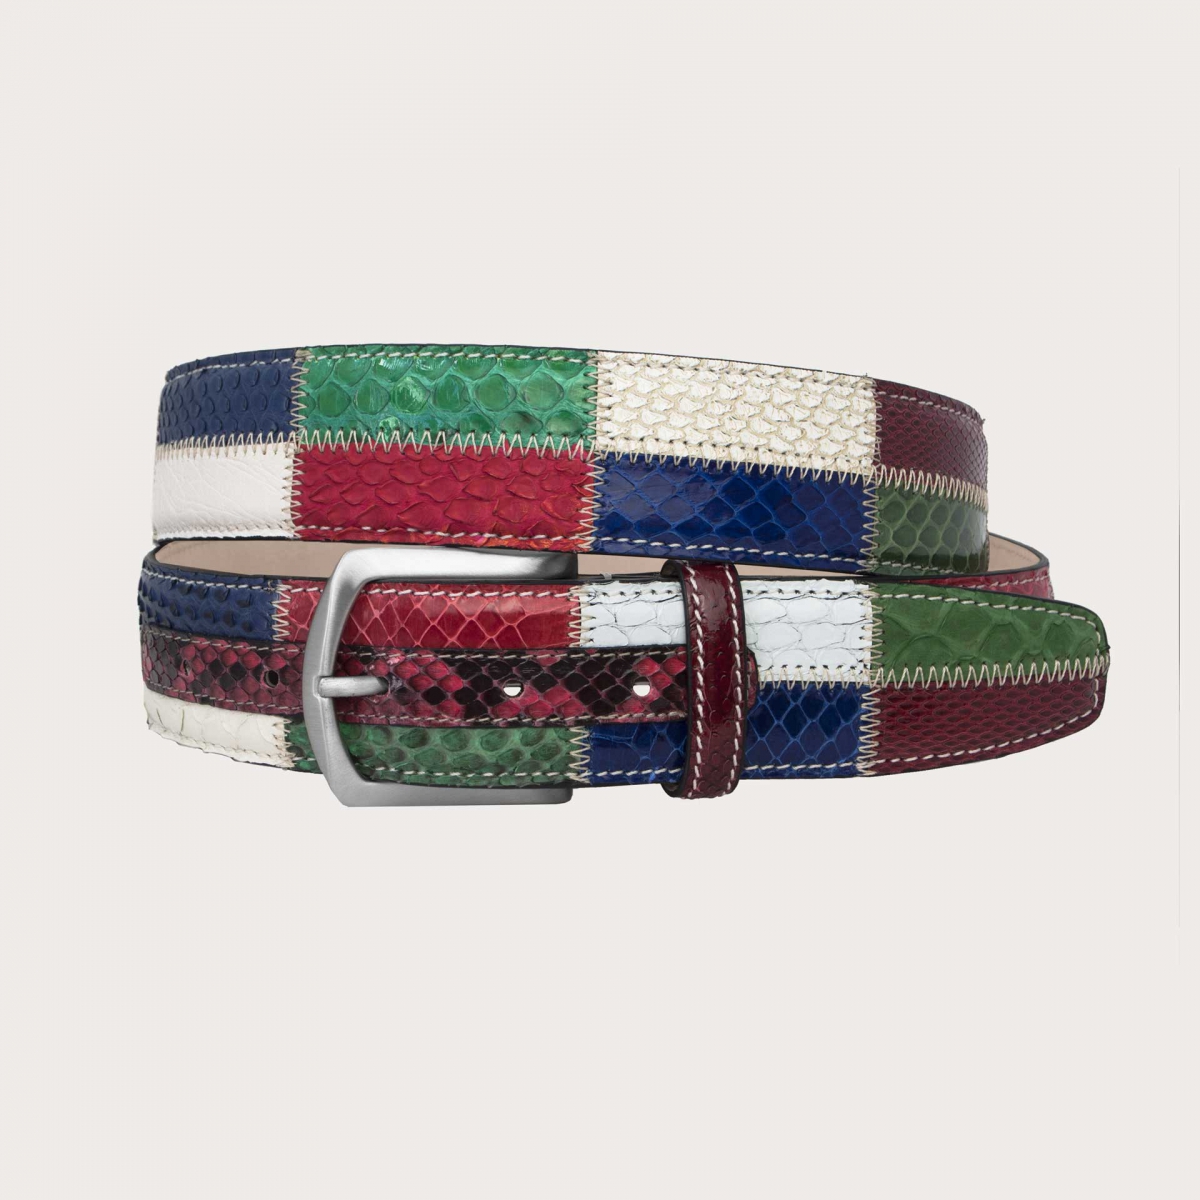 Cintura patchwork in vero pitone multicolore verde blu rosso bianco